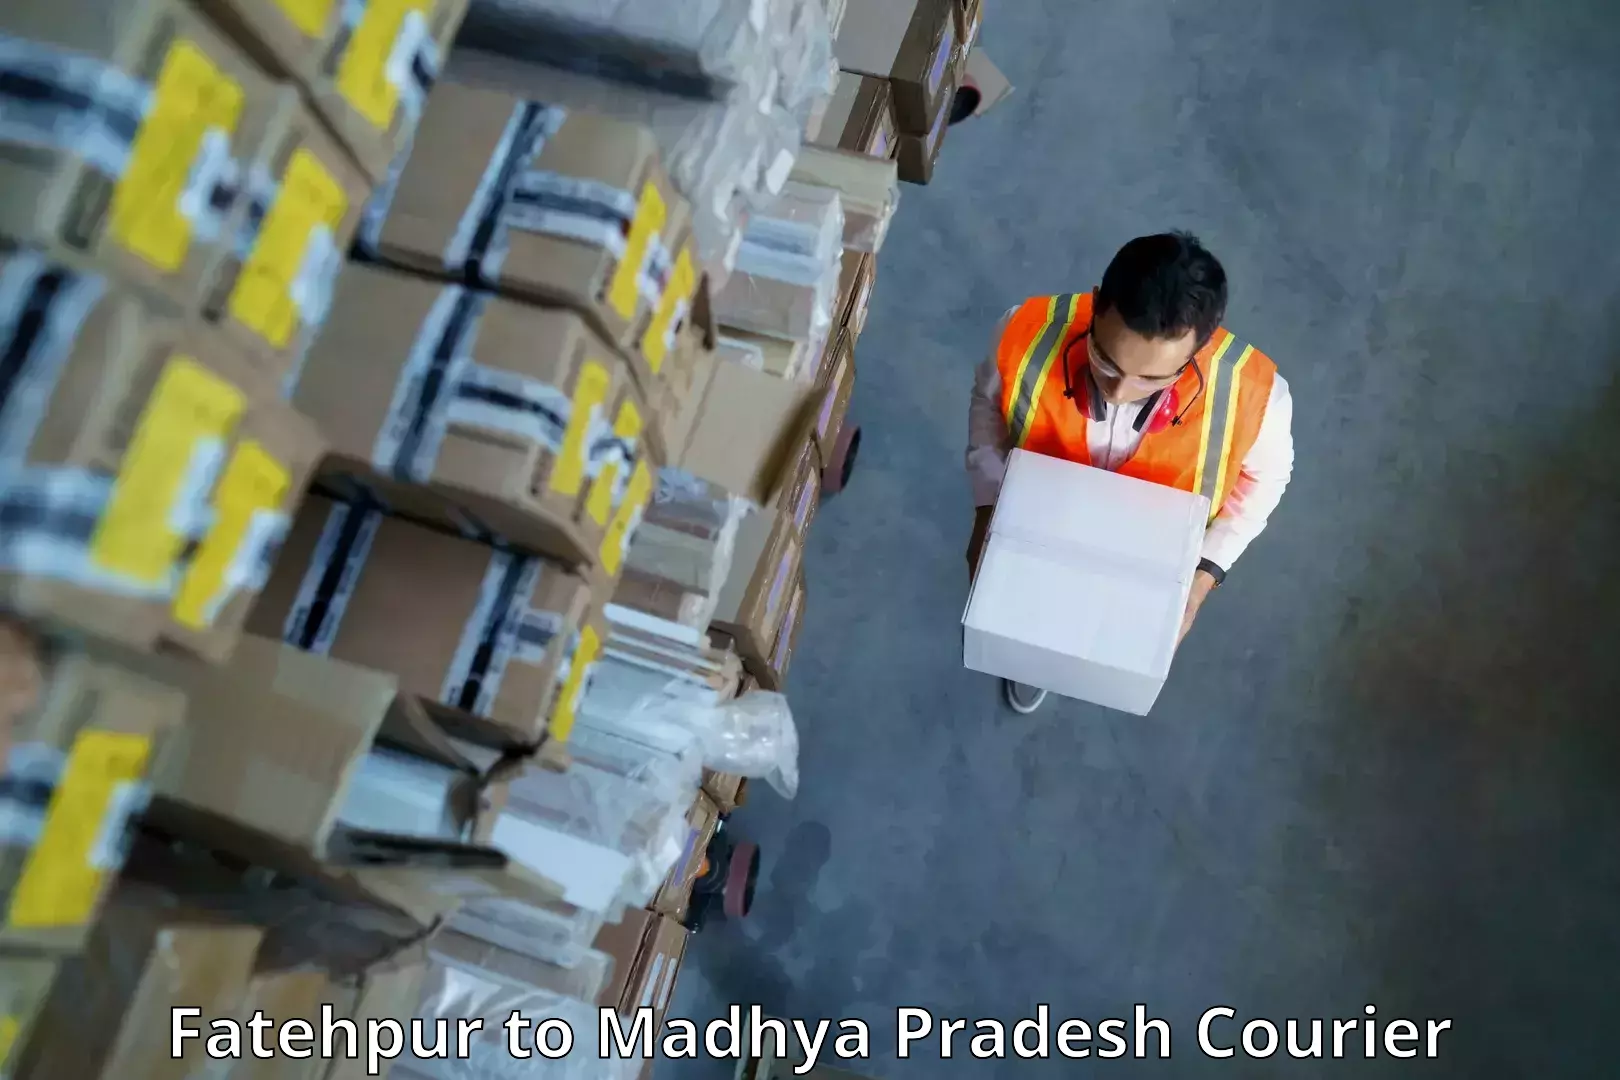 Global courier networks Fatehpur to Mandla